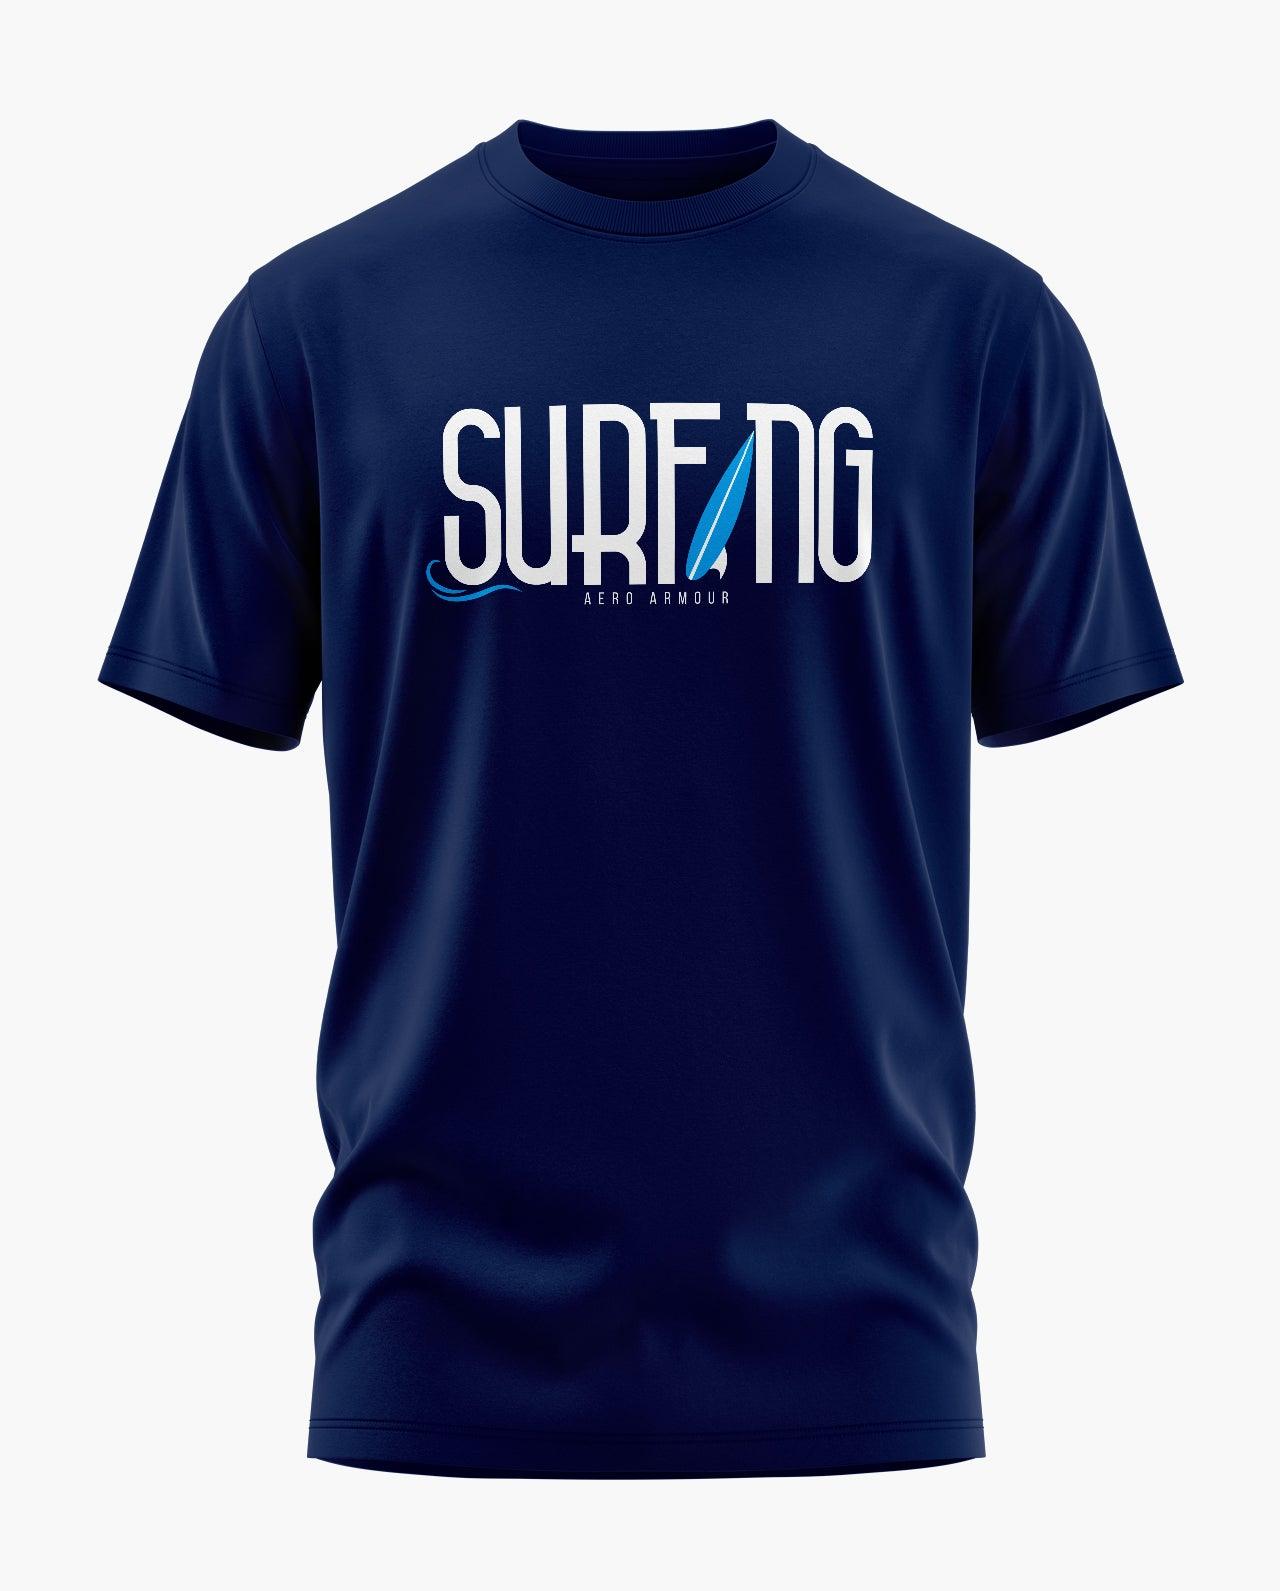 Surfing Text T-Shirt - Aero Armour